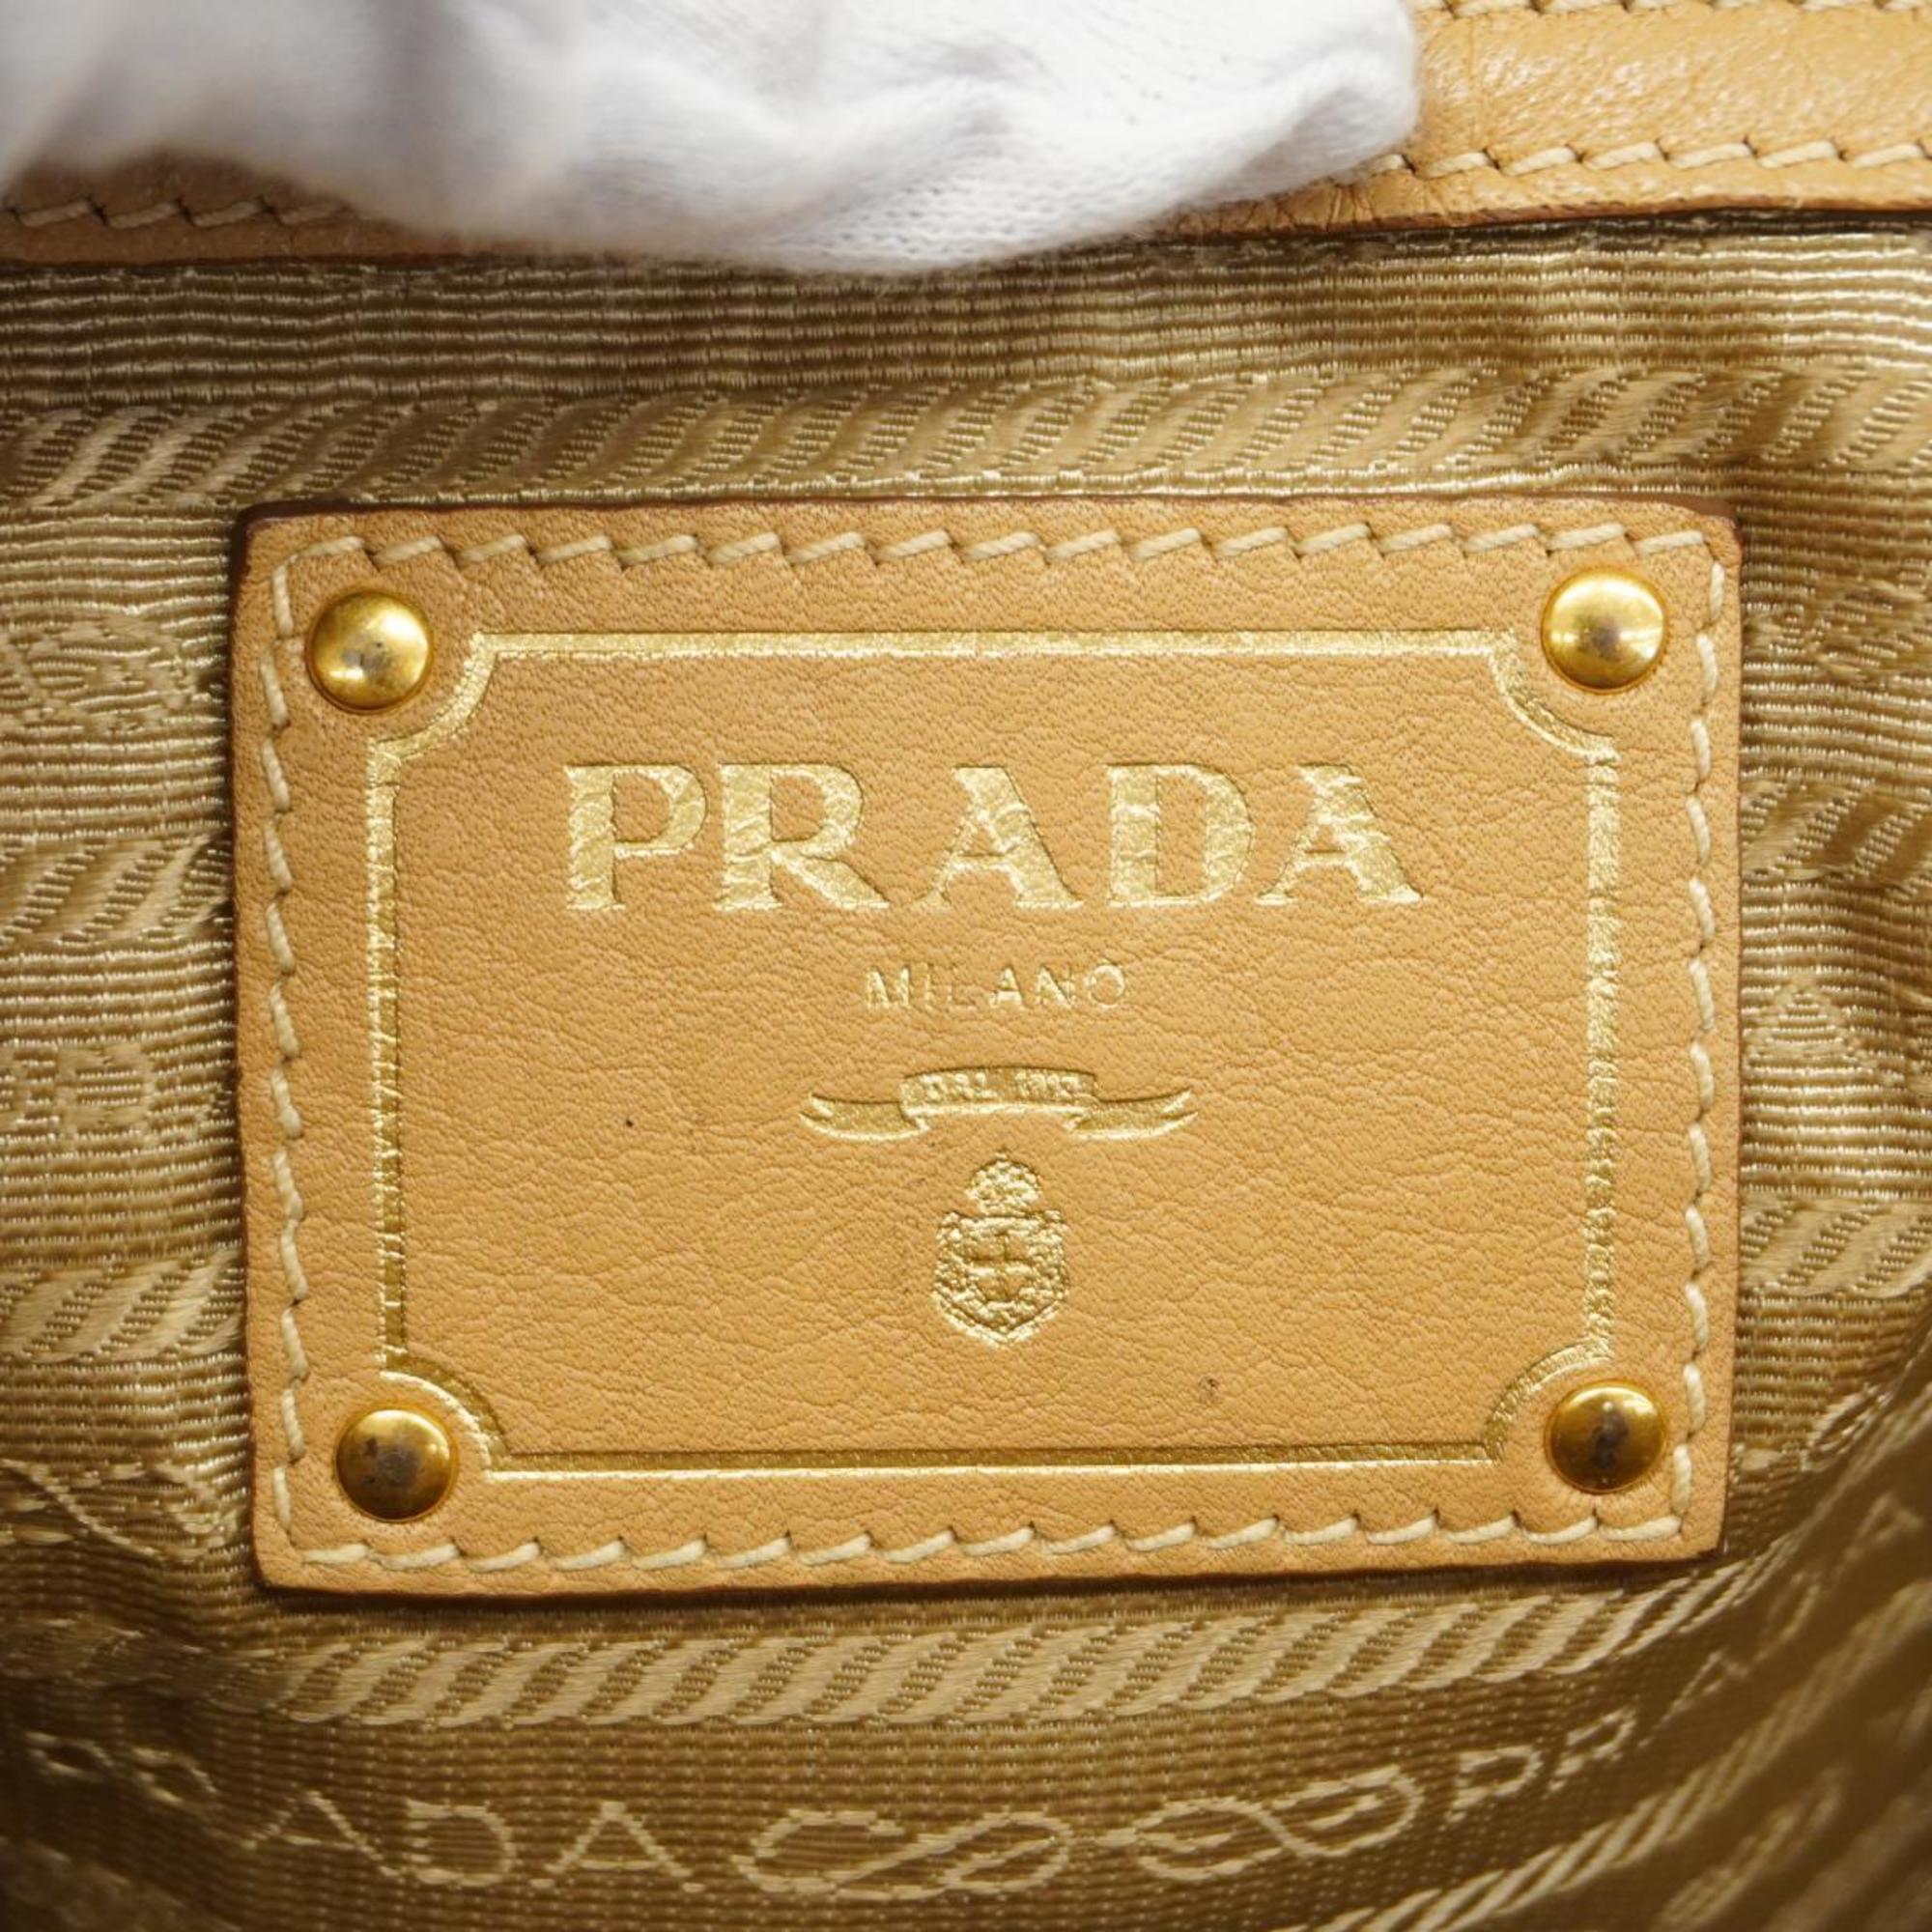 Prada tote bag leather beige women's